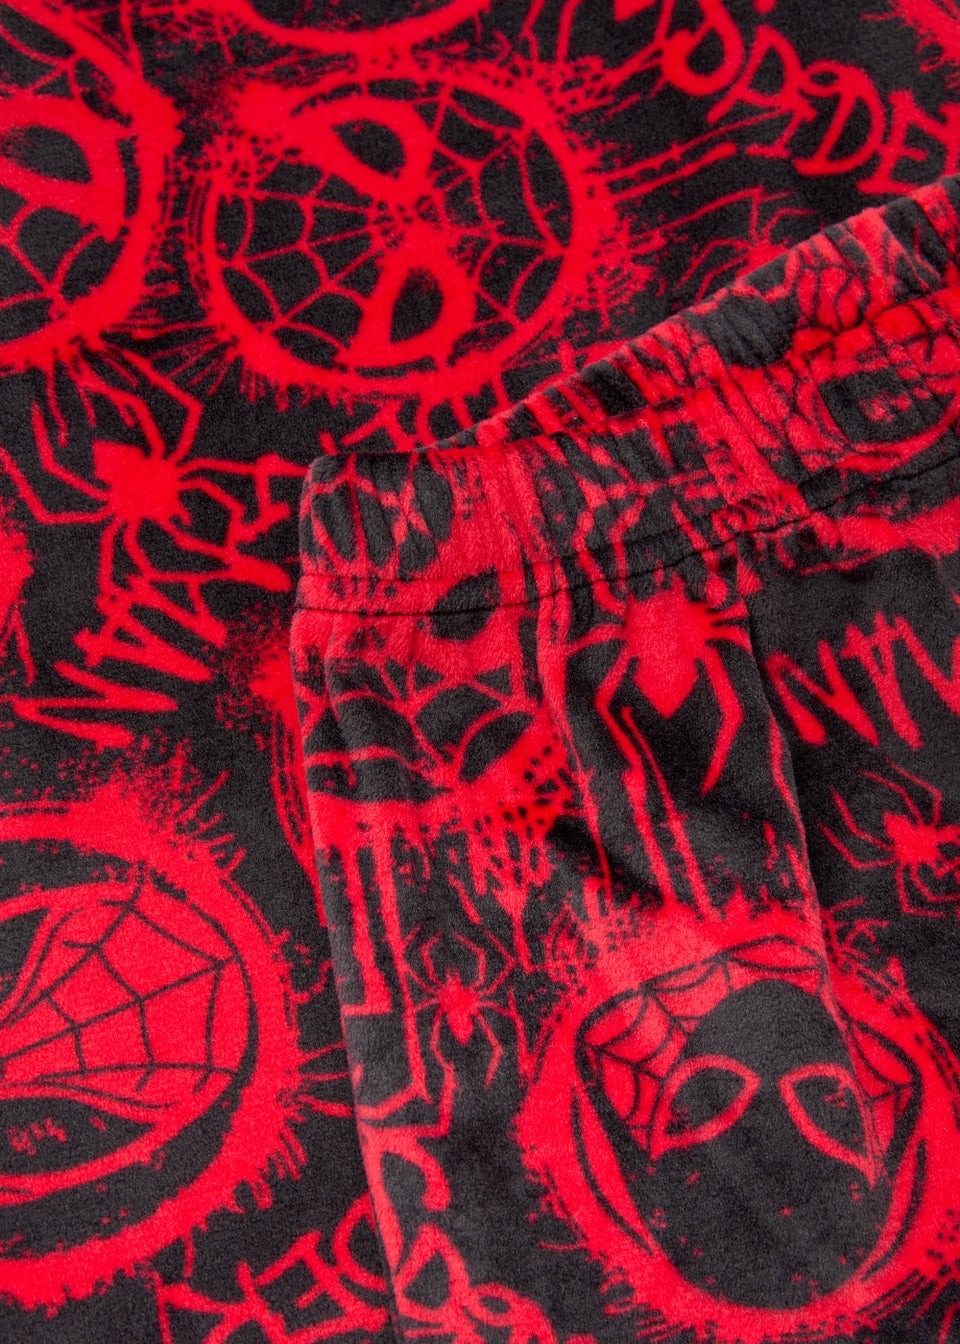 Kids Black Marvel Spider-Man Fleece Pyjama Set (18mths-8yrs)